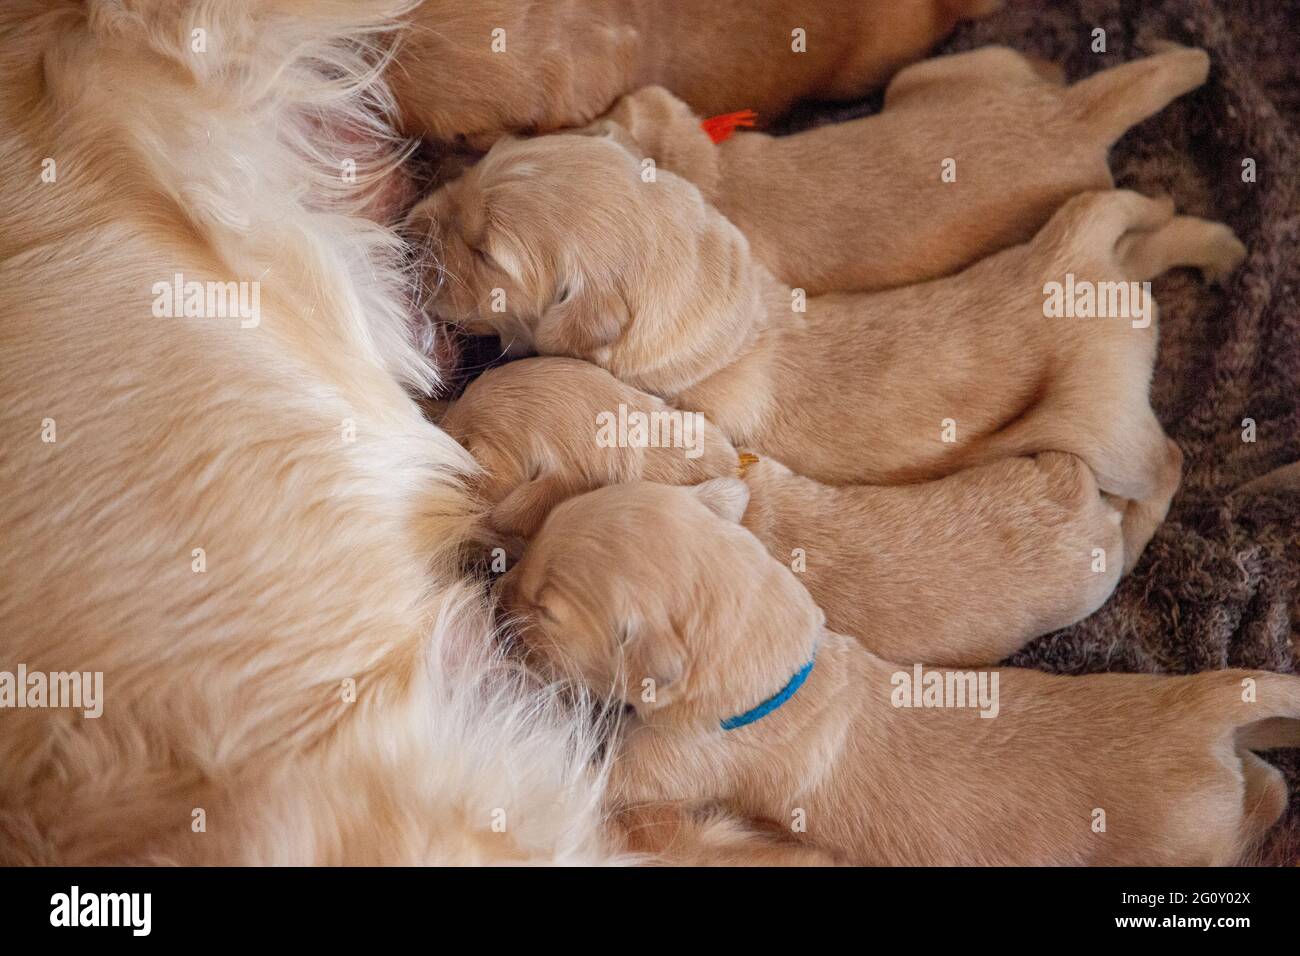 tiny week old golden retriever puppies nurse on their mom Stock Photo